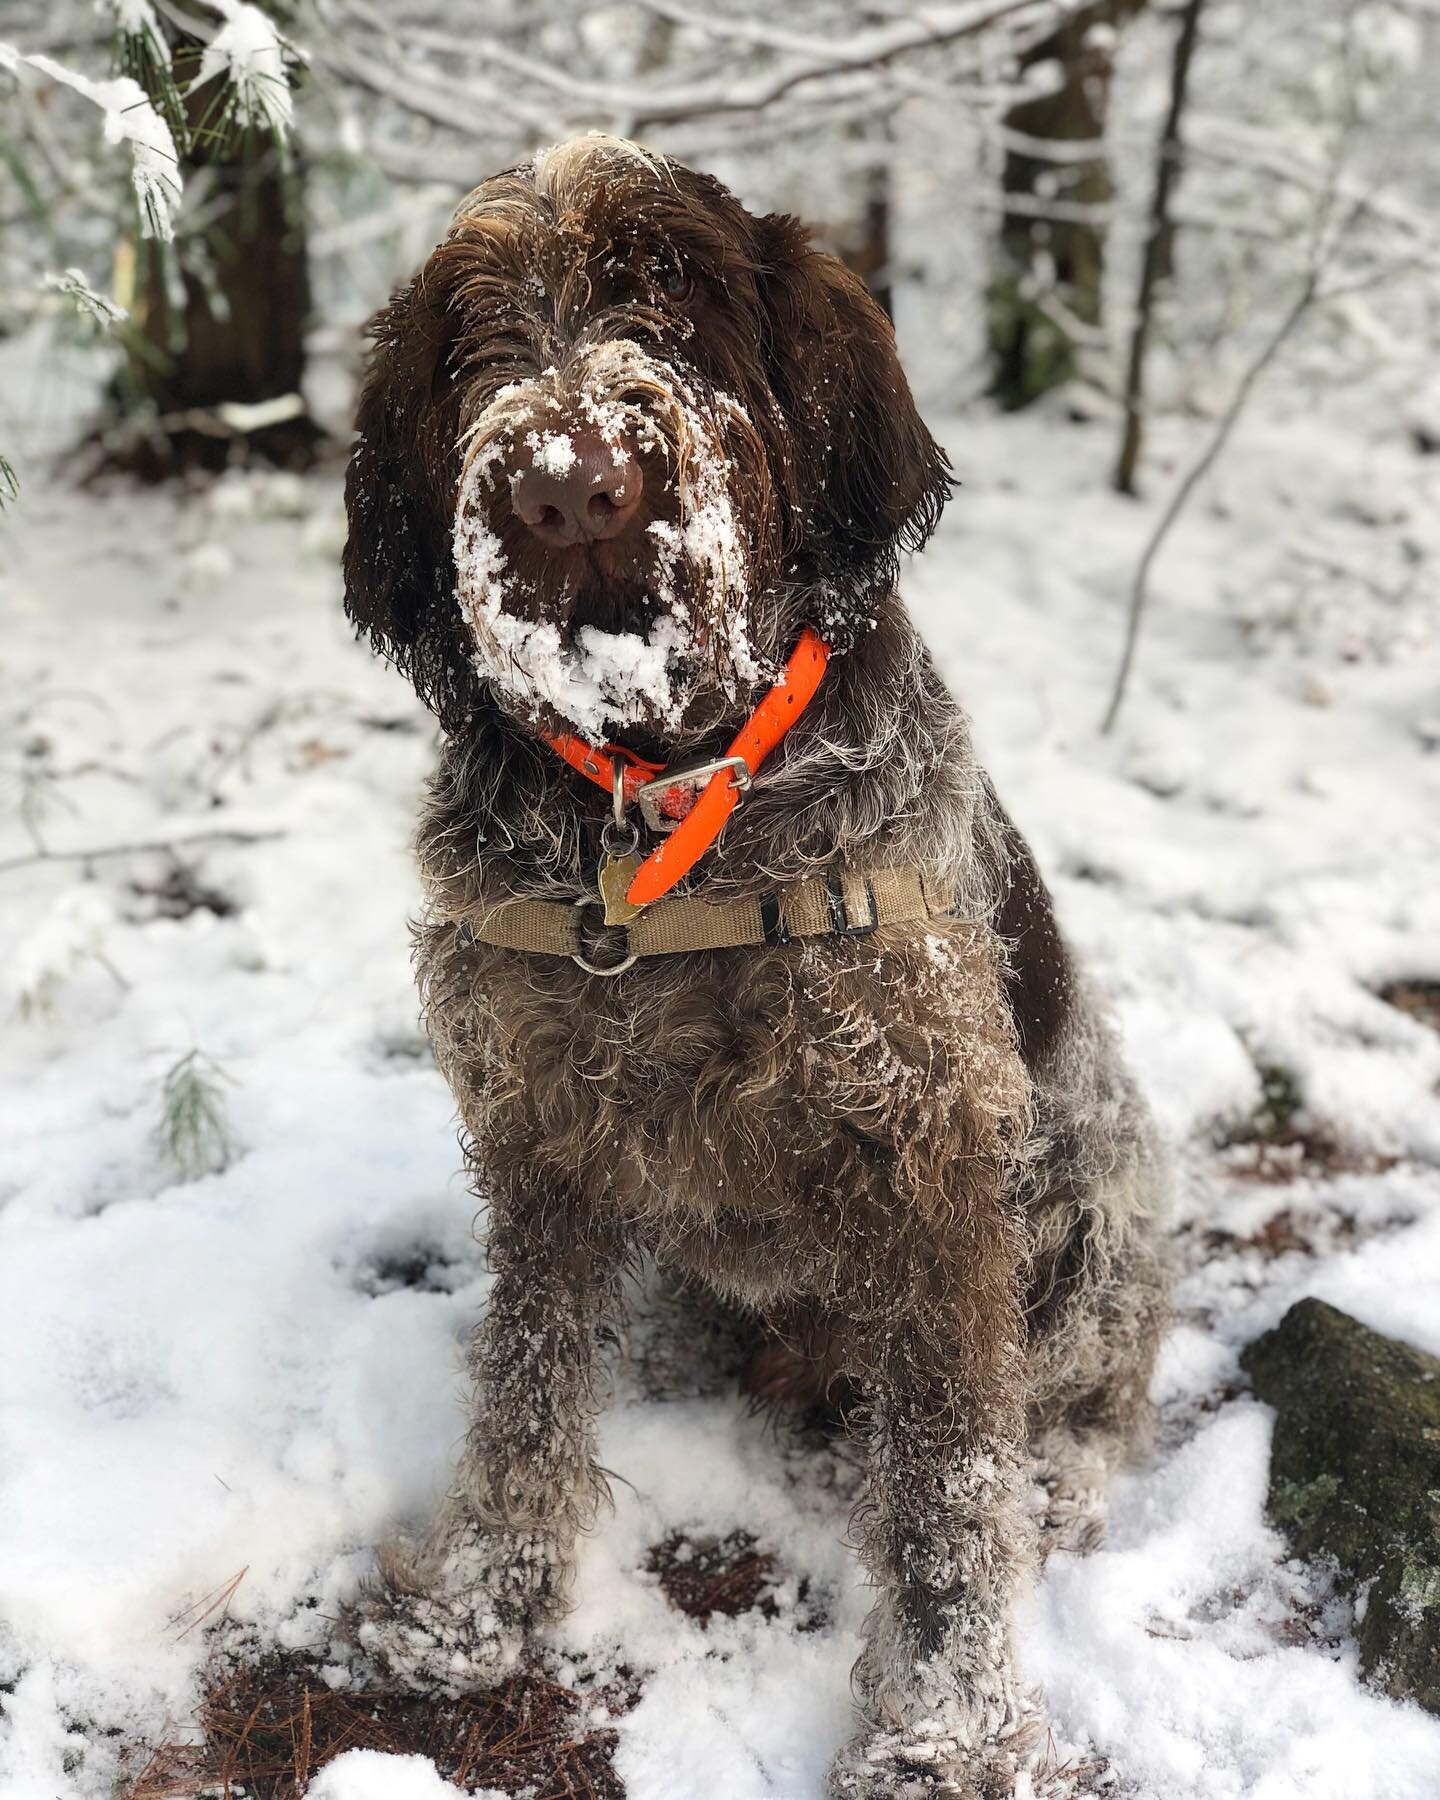 Appa and his snow beard ❄️ #goodboy